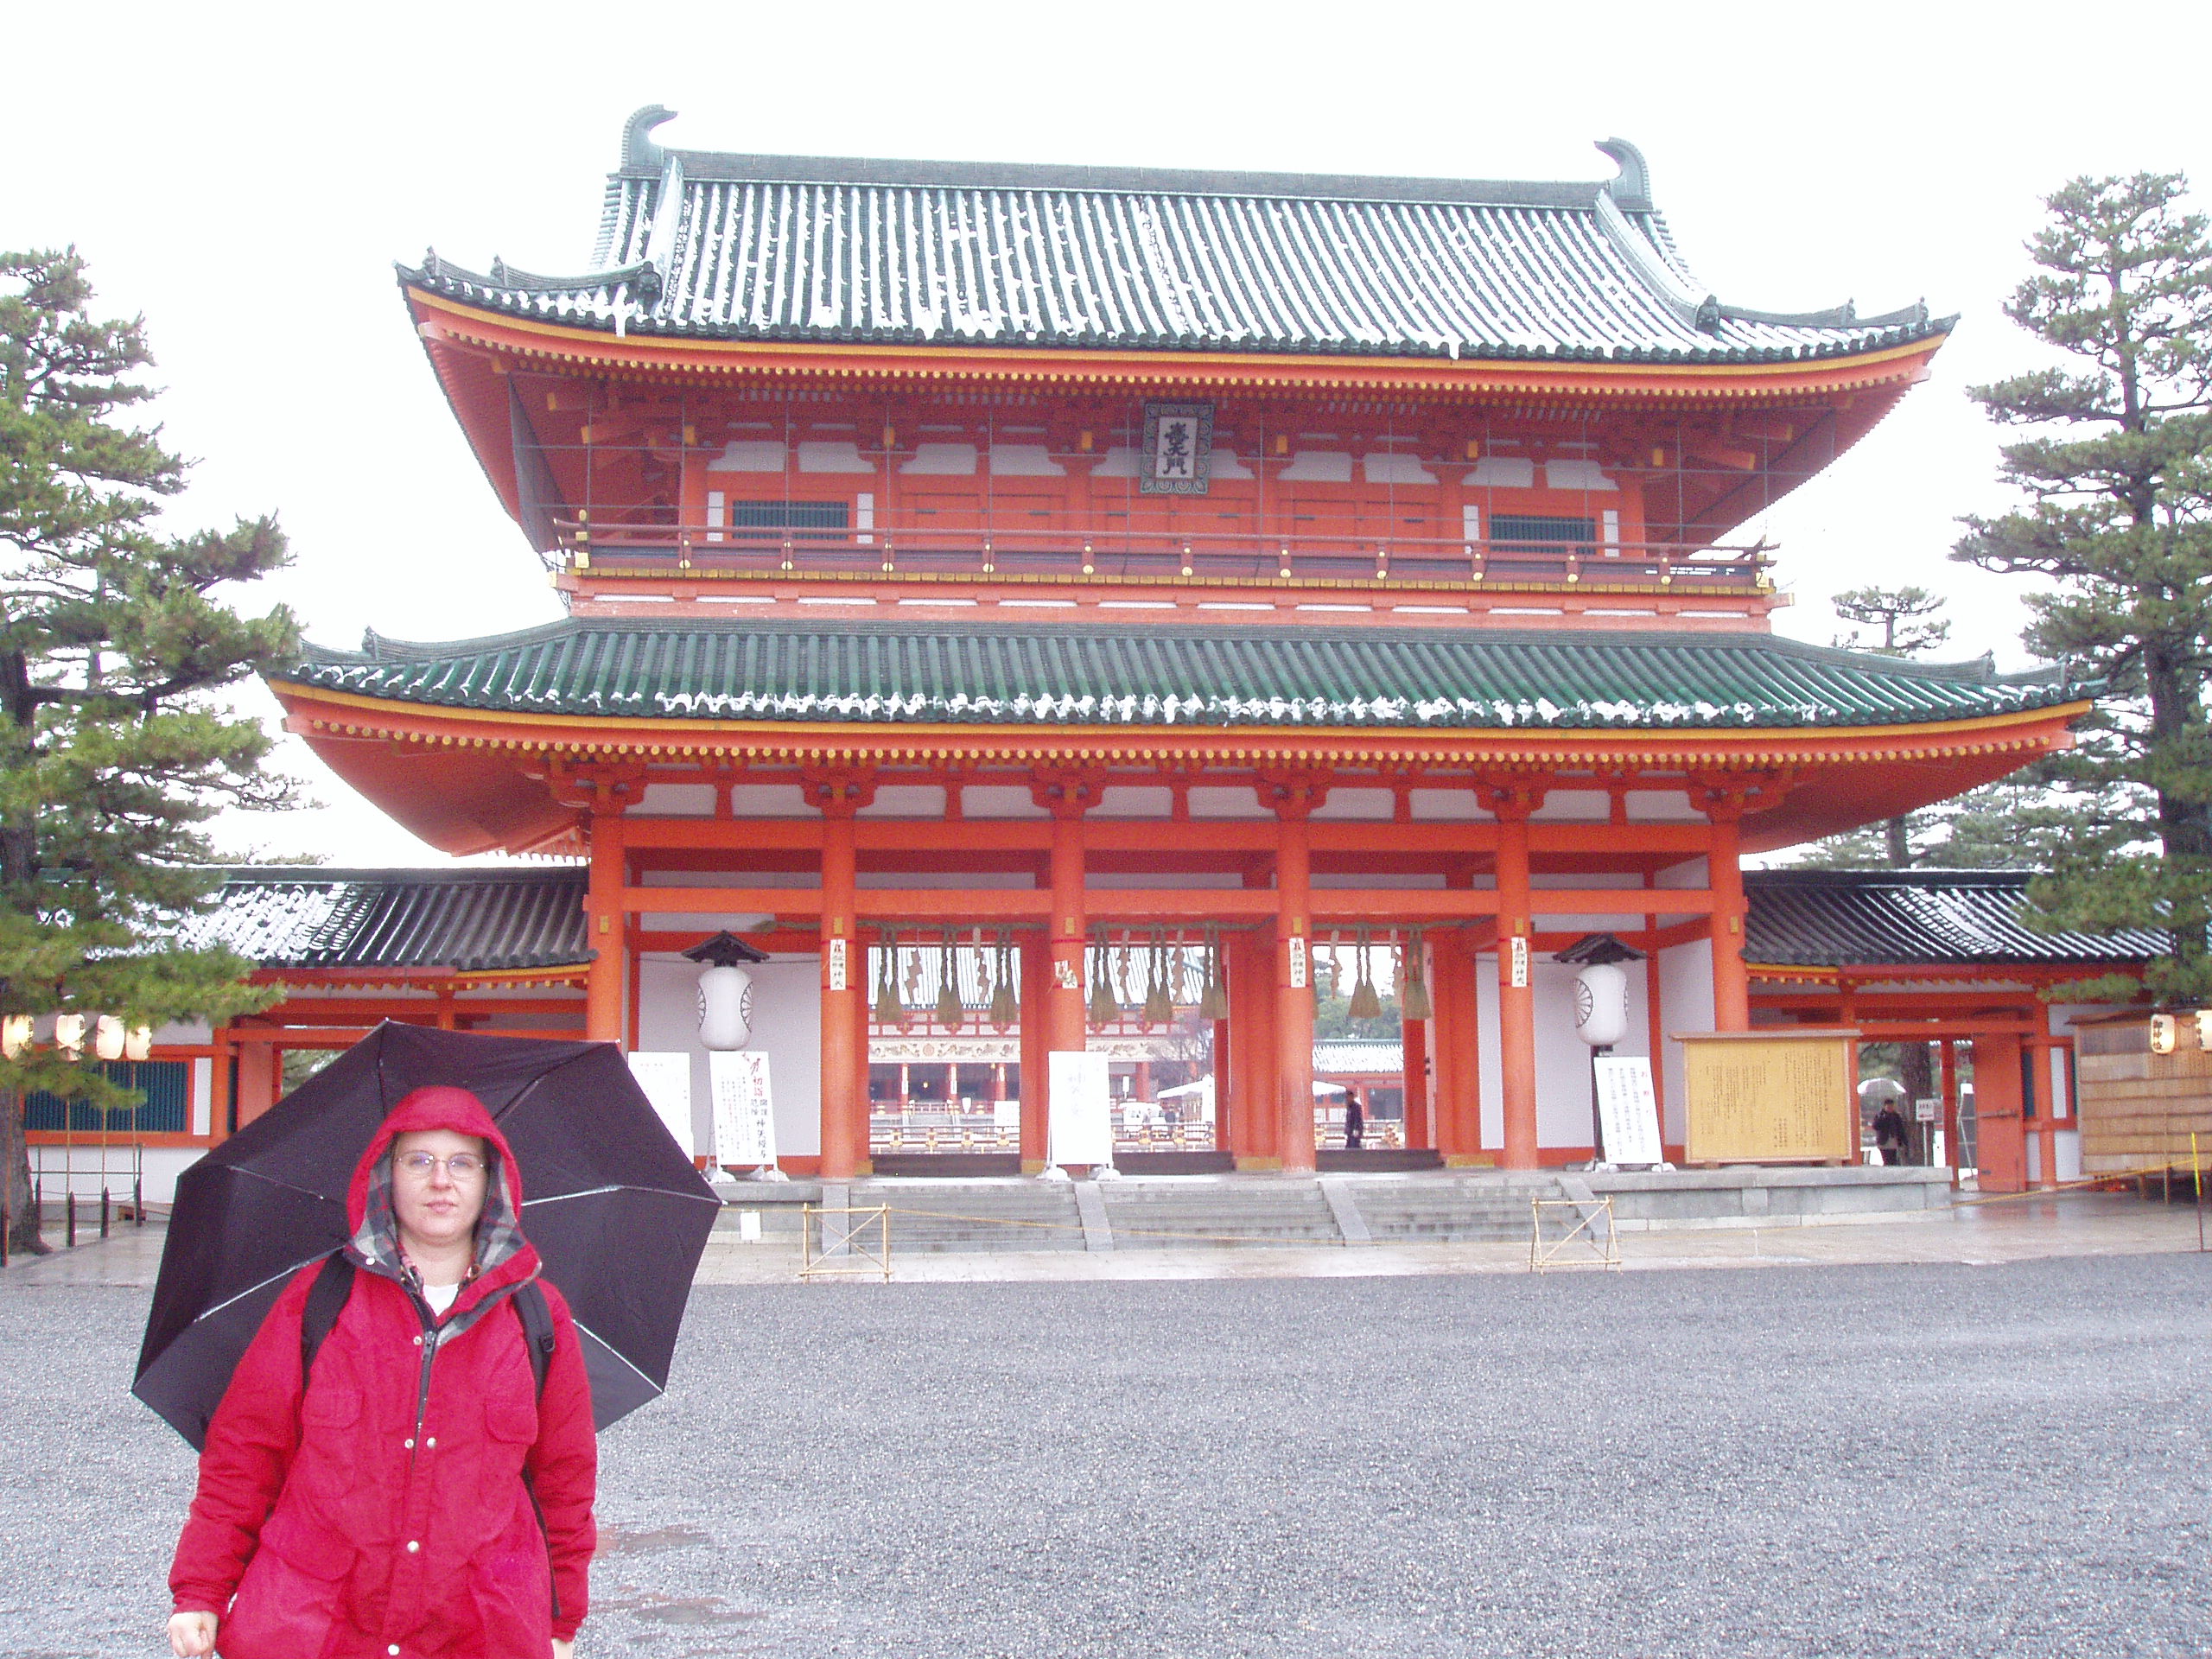 Heian Jingu temple in Kyoto